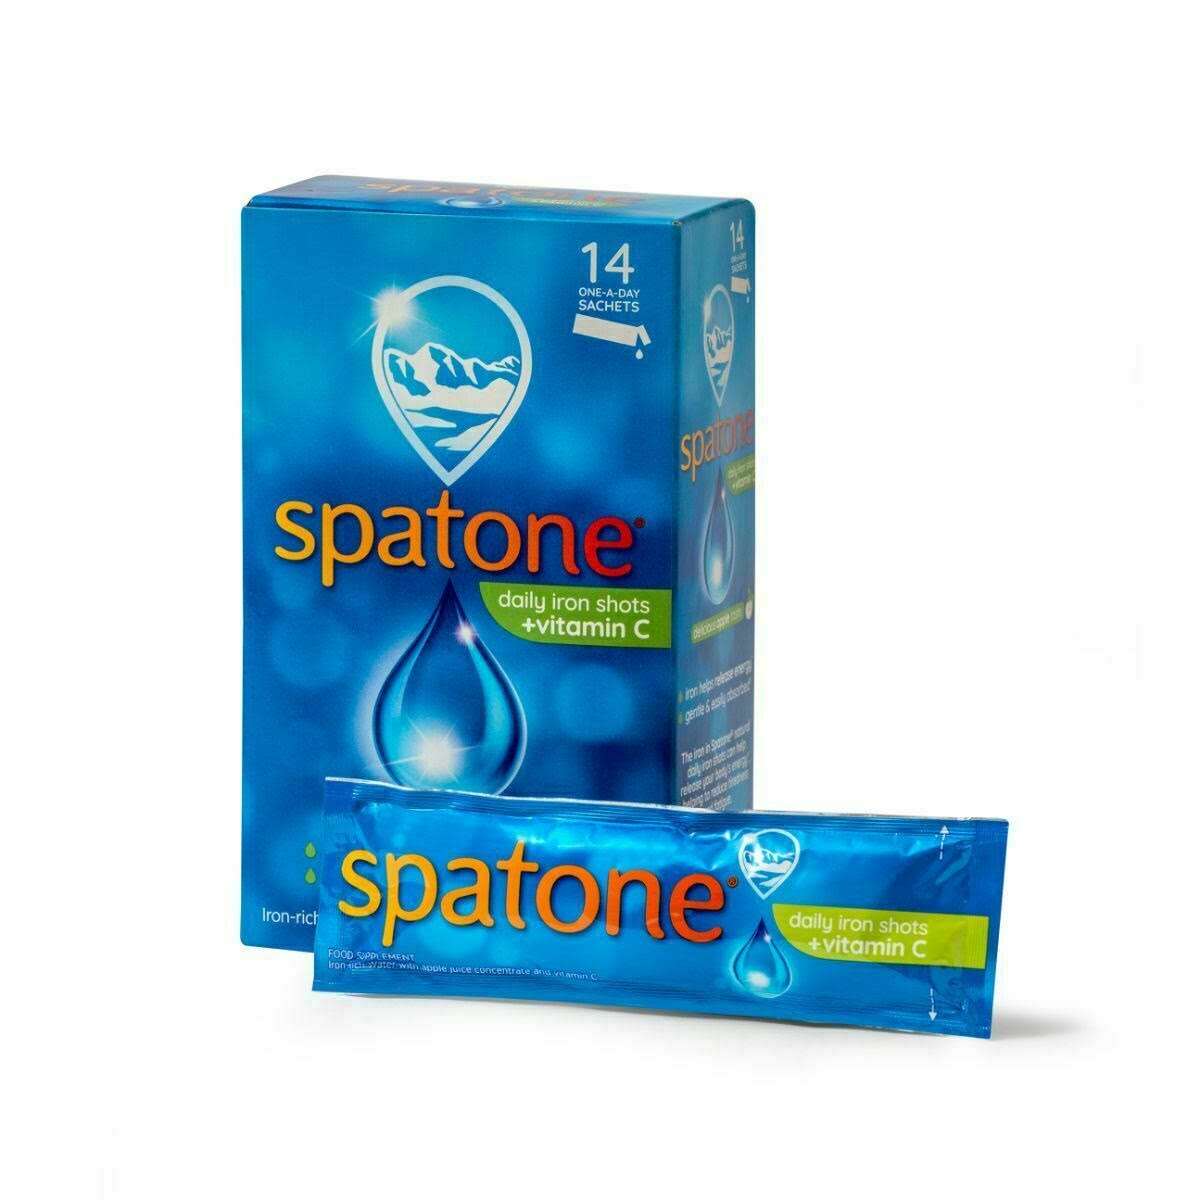 Spatone Liquid Iron with Vitamin C - 25ml, 14 Sachets